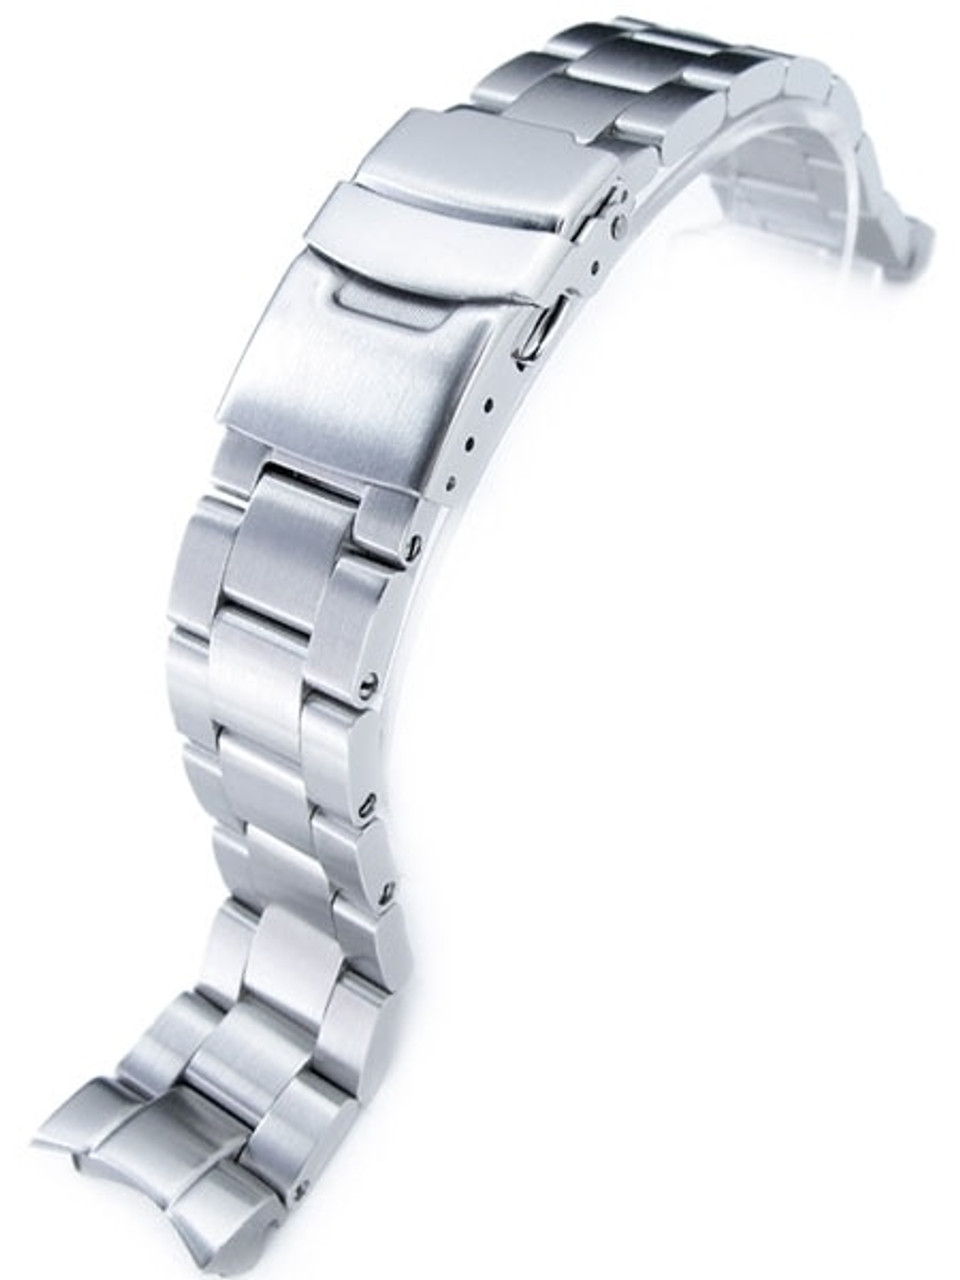 New Bracelet for Seiko SKX 013 | WatchCrunch